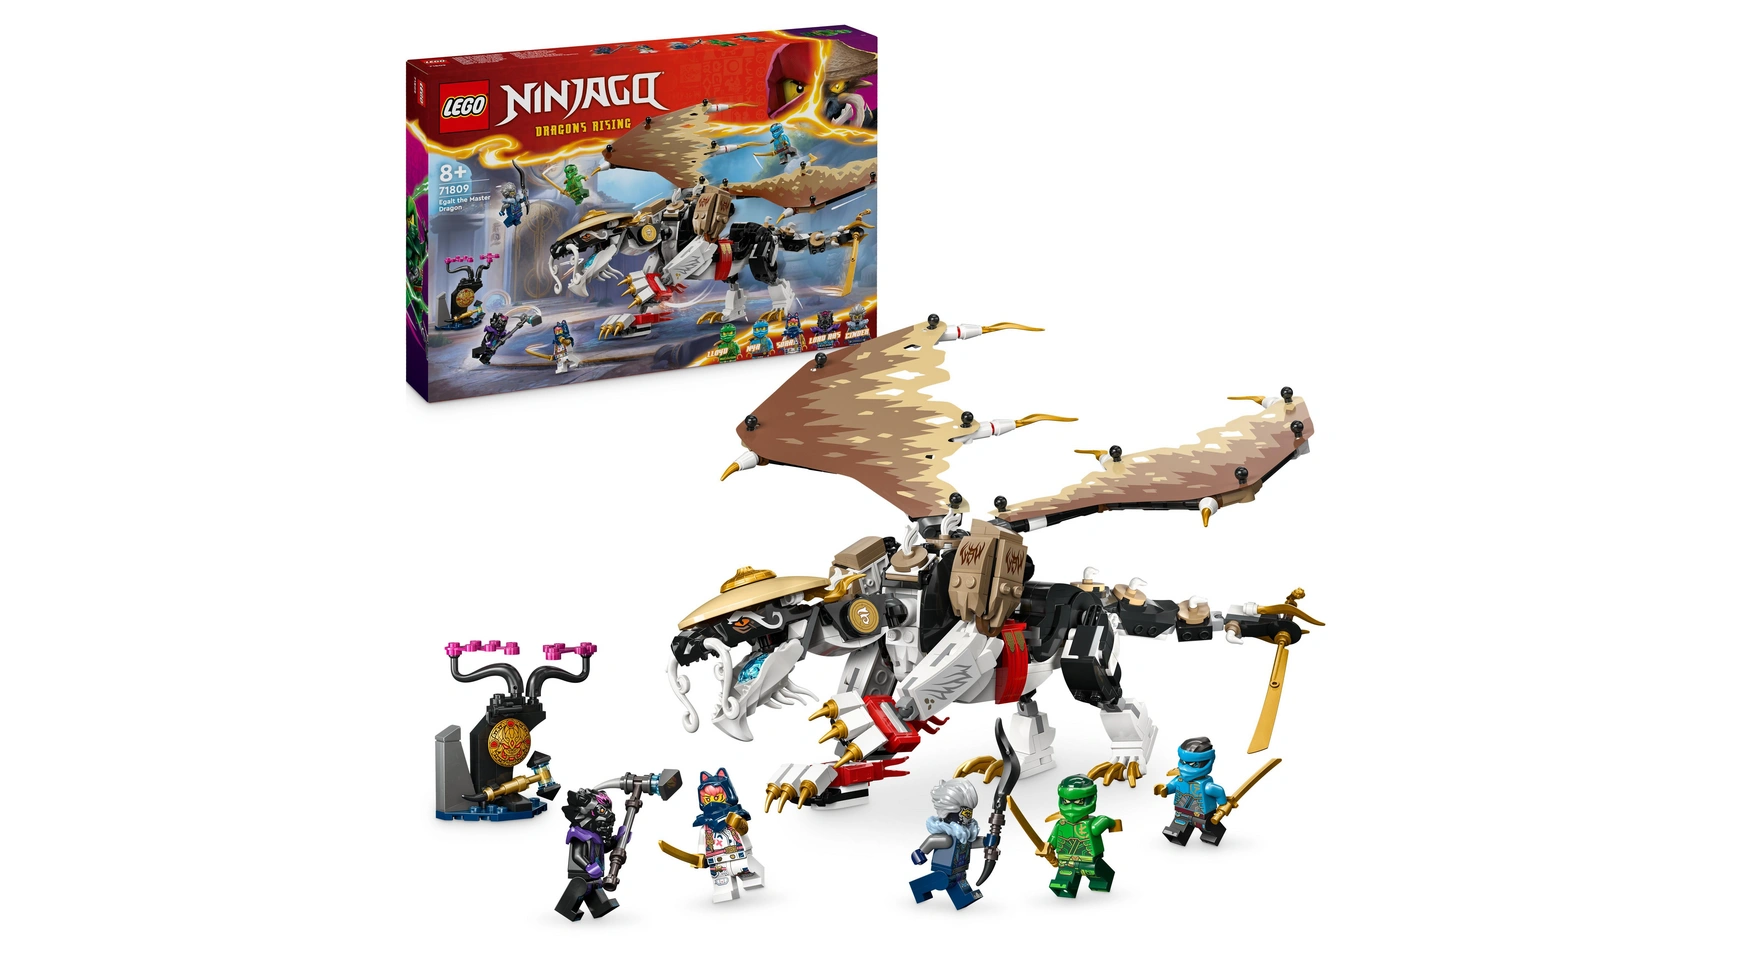 Lego NINJAGO Эгалт повелитель драконов, набор ниндзя с игрушками-драконами lego ninjago cole s earth dragon evo игрушка дракон с фигурками